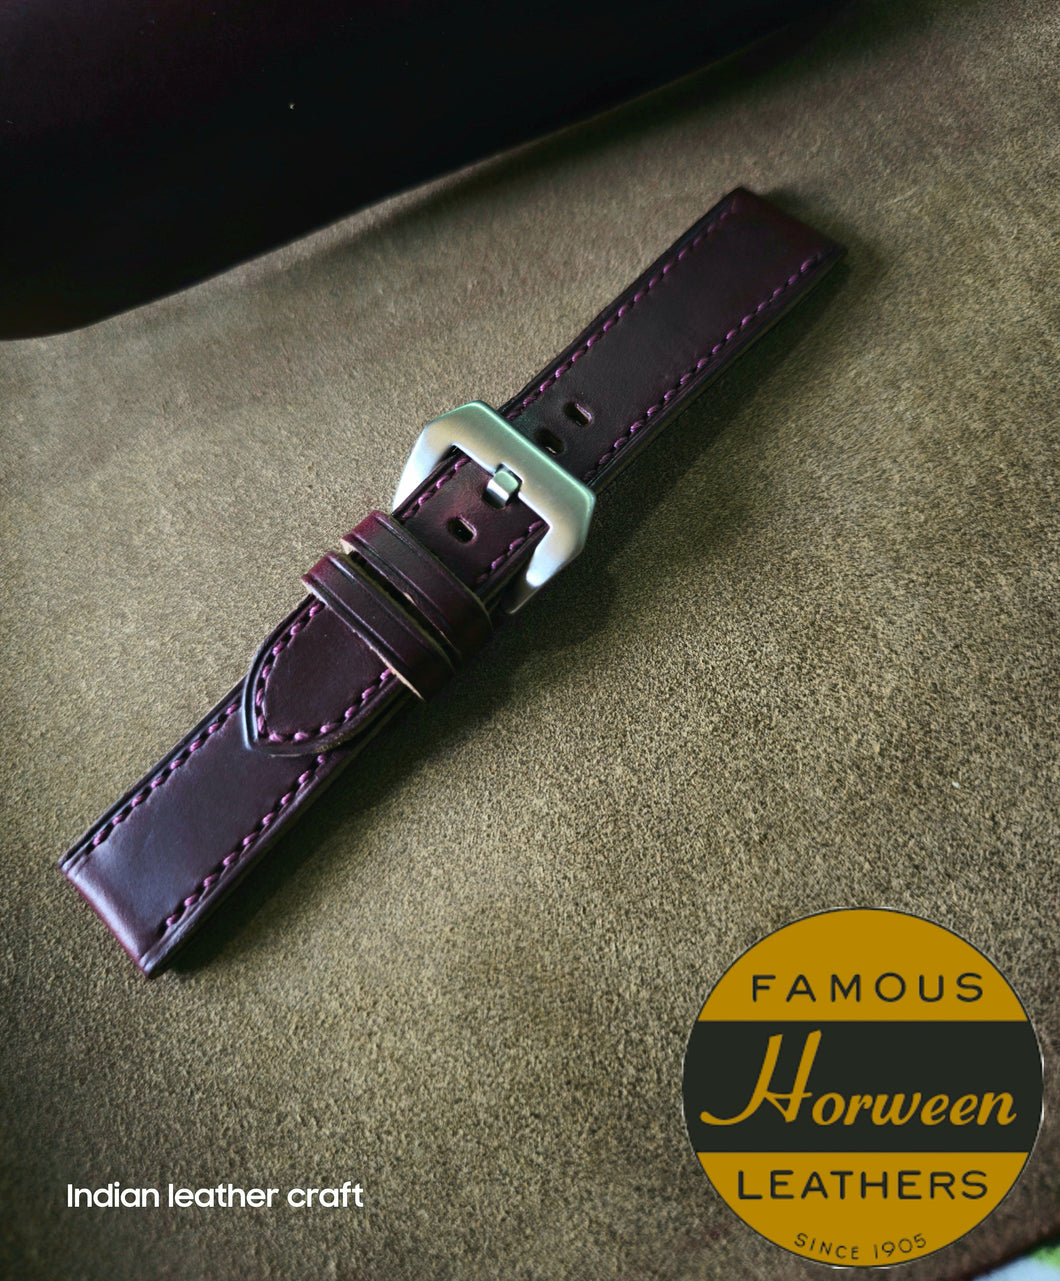 Indianleathercraft Burgundy / 20mm Horween leather watch strap